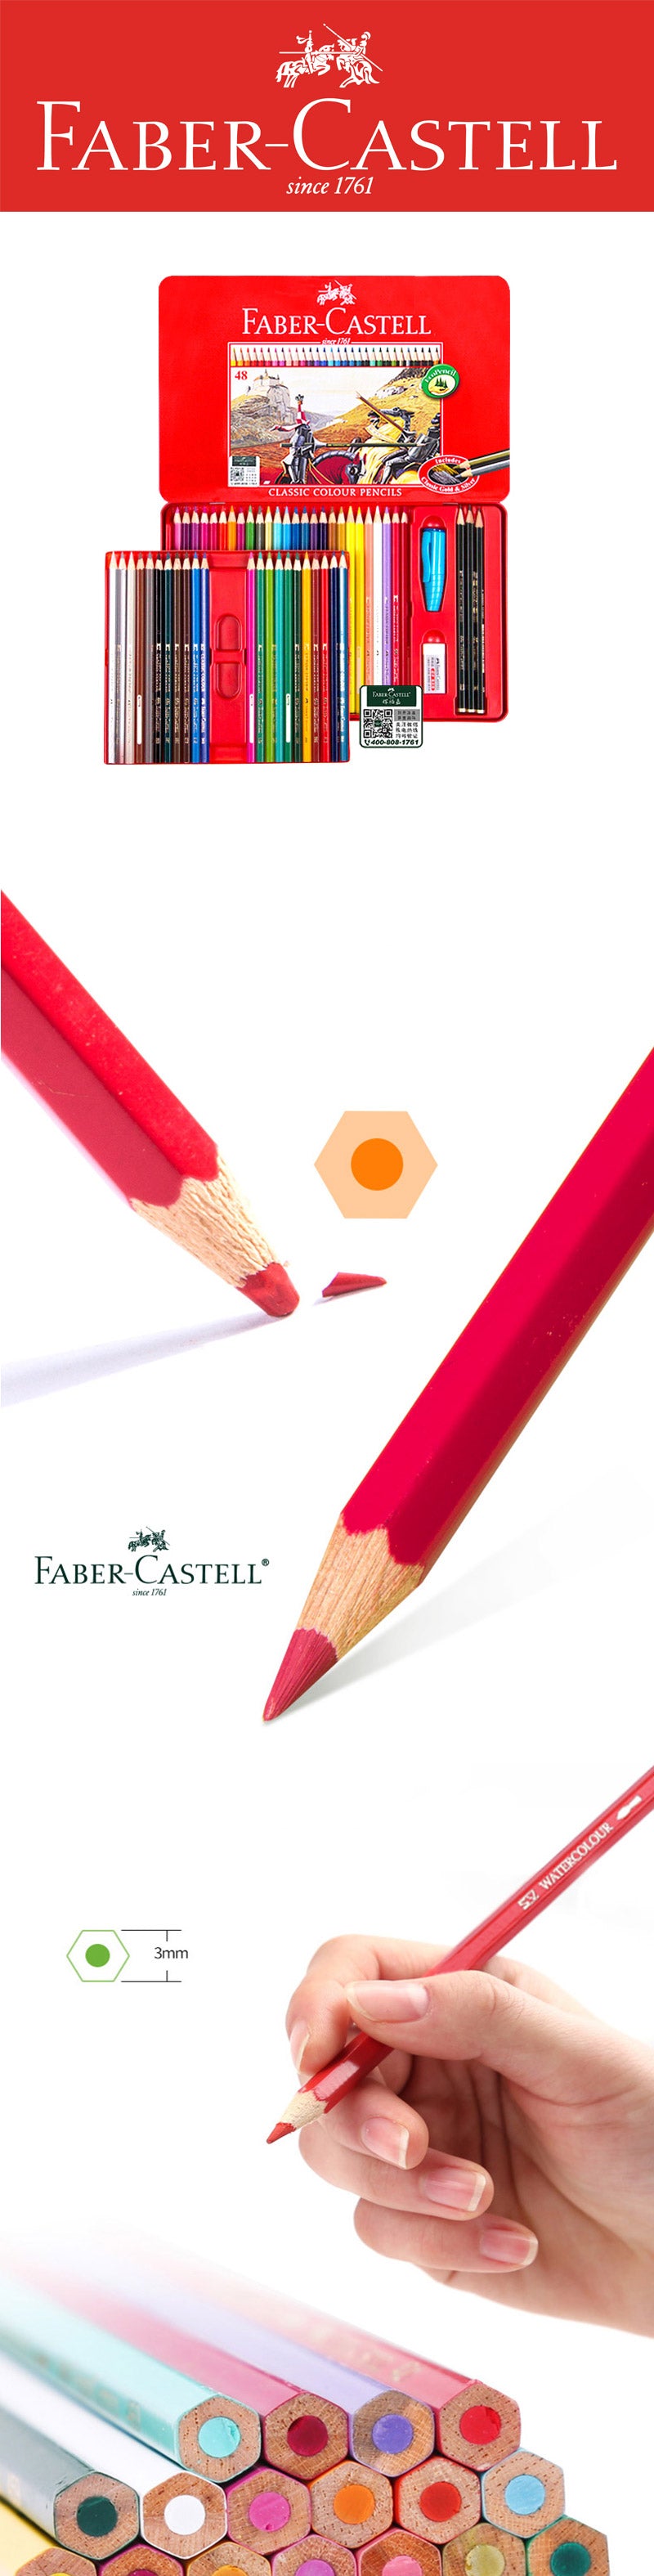 Unboxing Faber Castell Classic Color pencil set of 48 Pencils